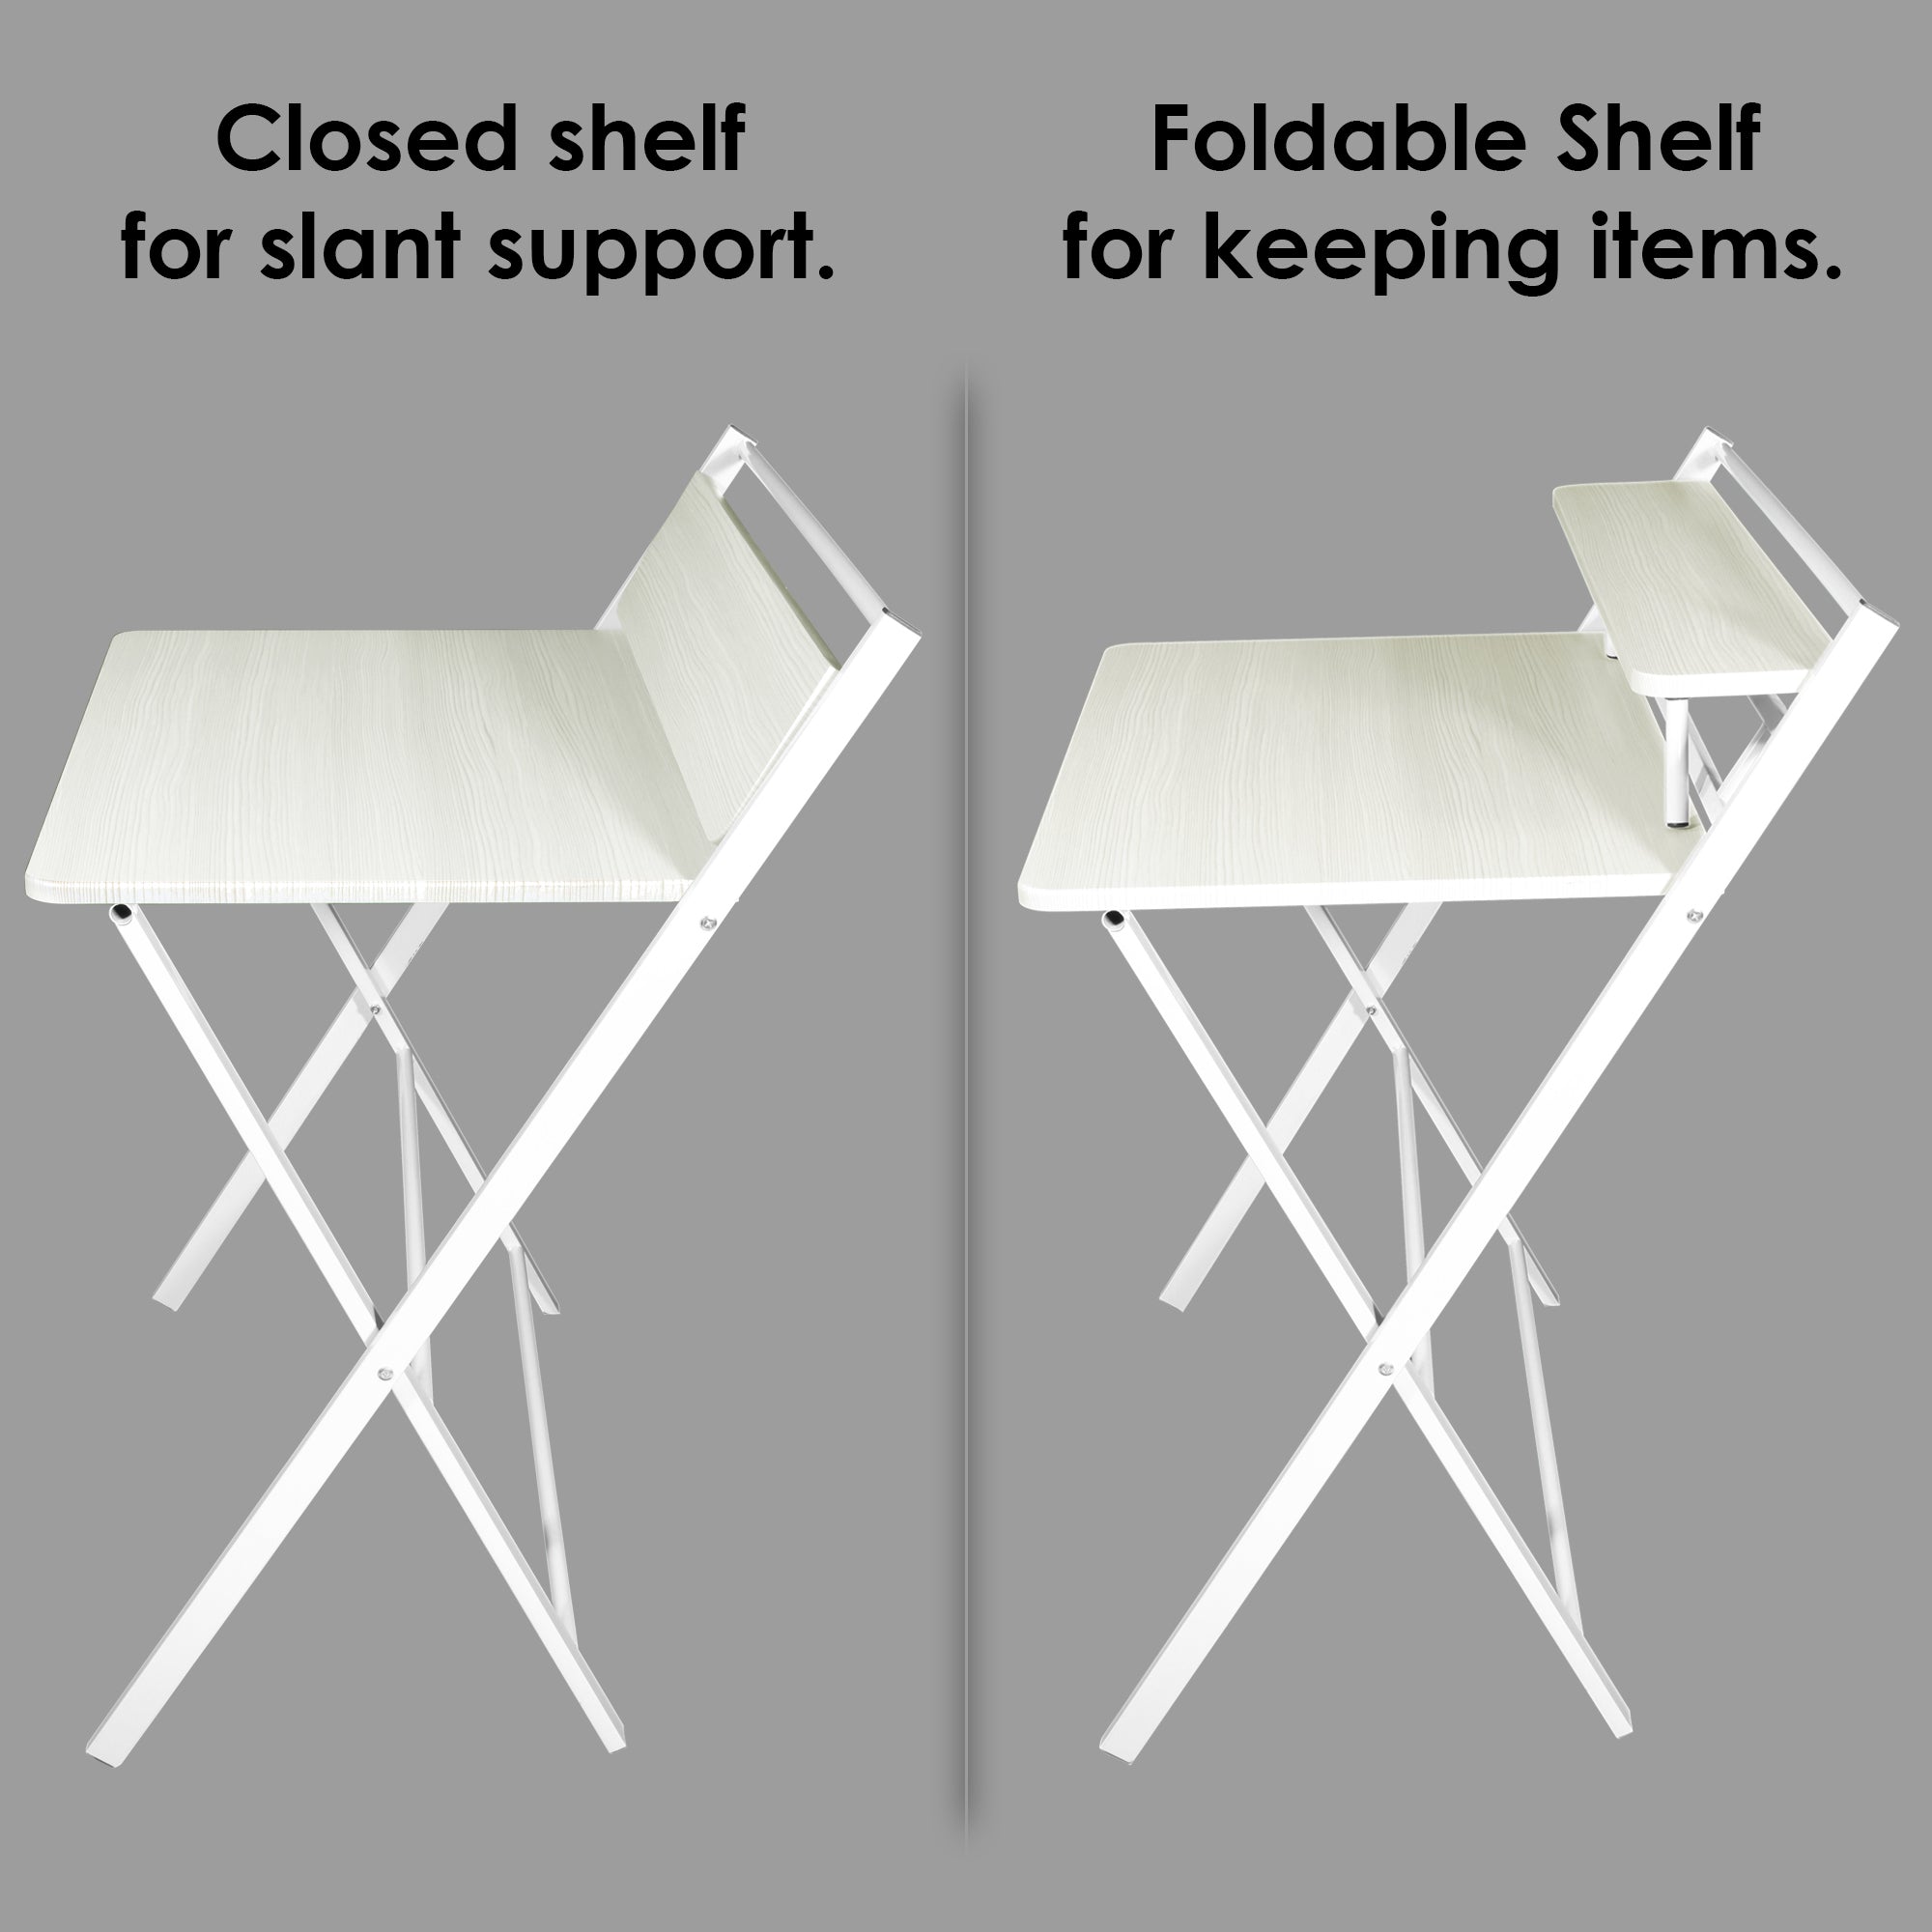 Multipurpose White Foldable Table